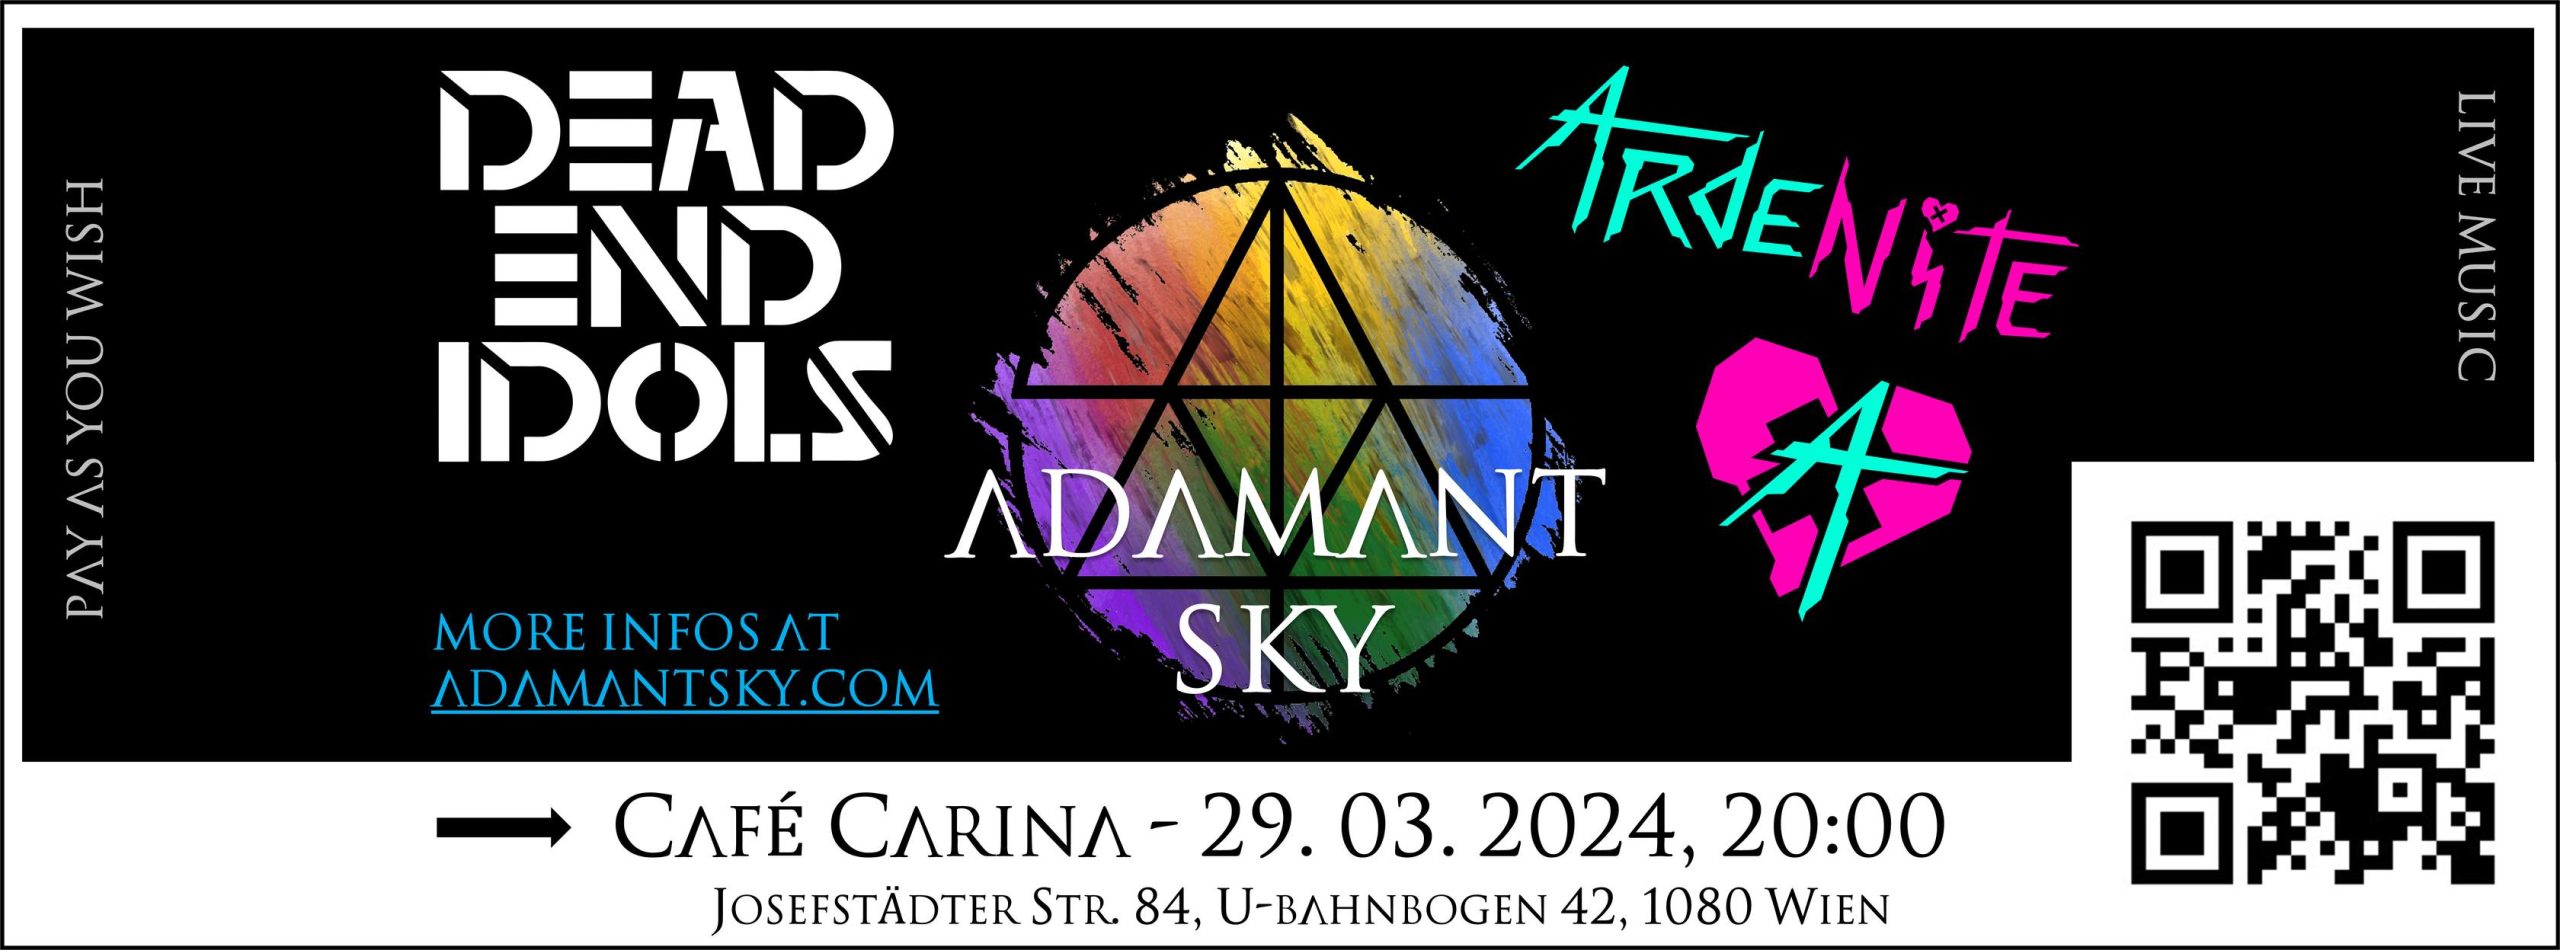 Adamant Sky - Ardenite am 29. March 2024 @ Café Carina.